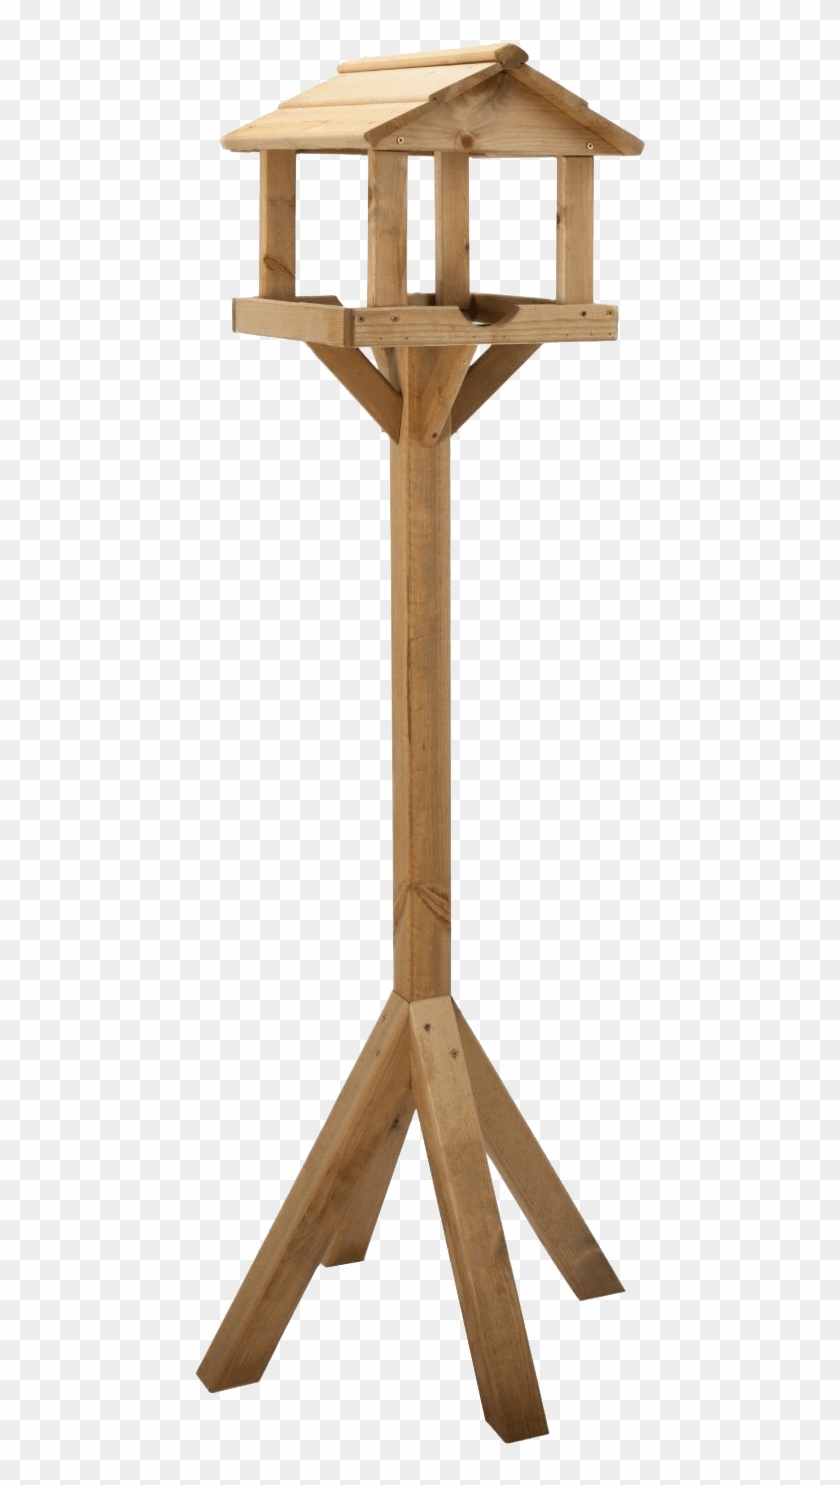 Wooden Bird Table Transparent Image - Simple Bird Table Design Clipart #1132284